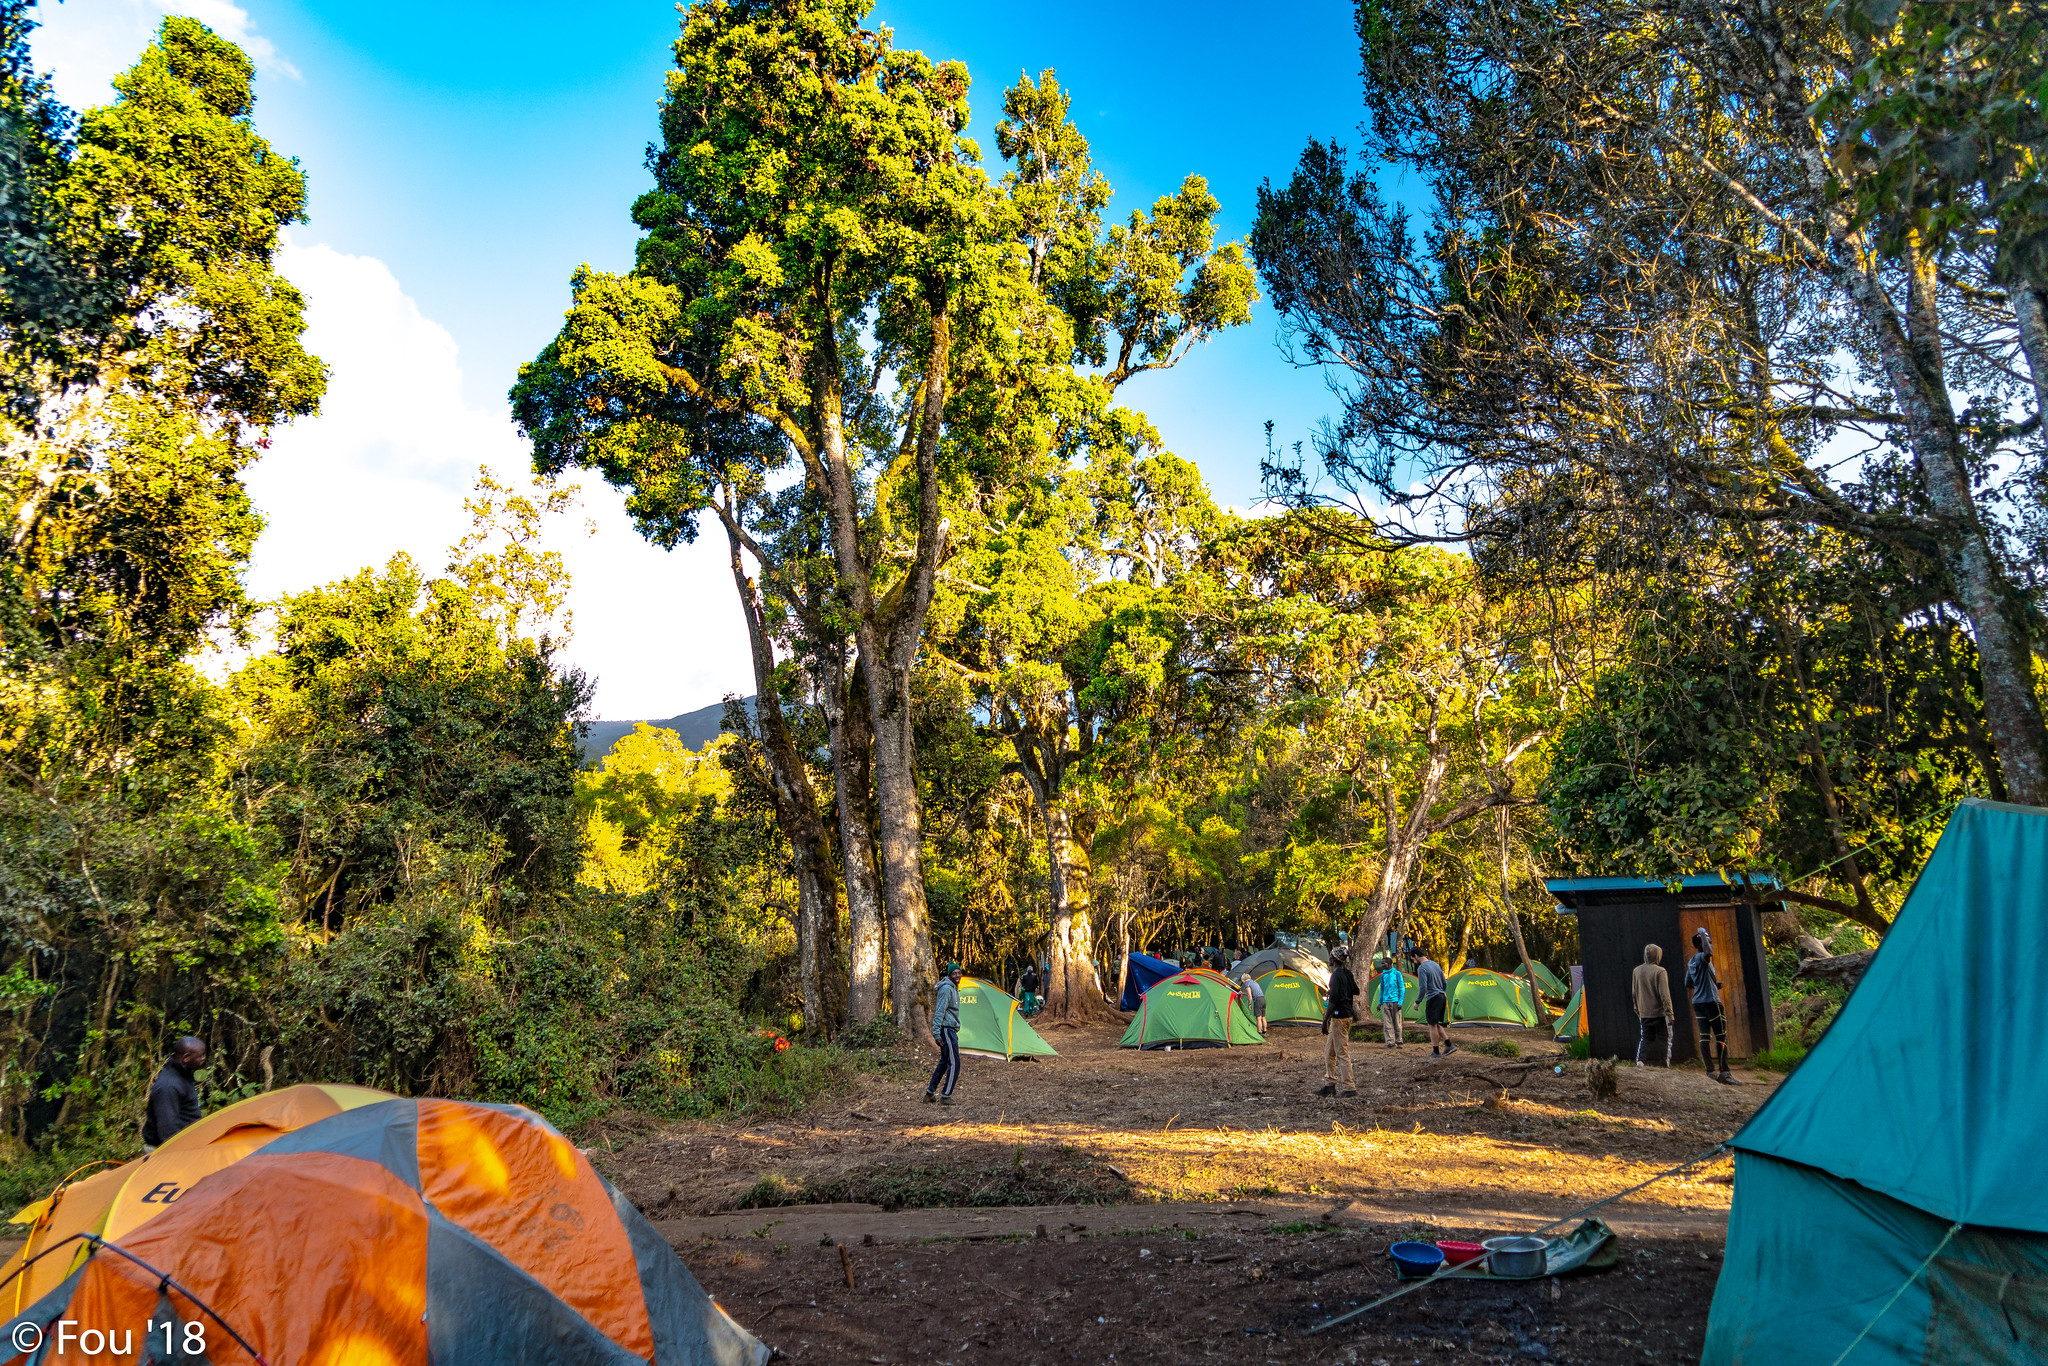 Mti Mkubwa Camp ( Big Tree Camp or Forest Camp)